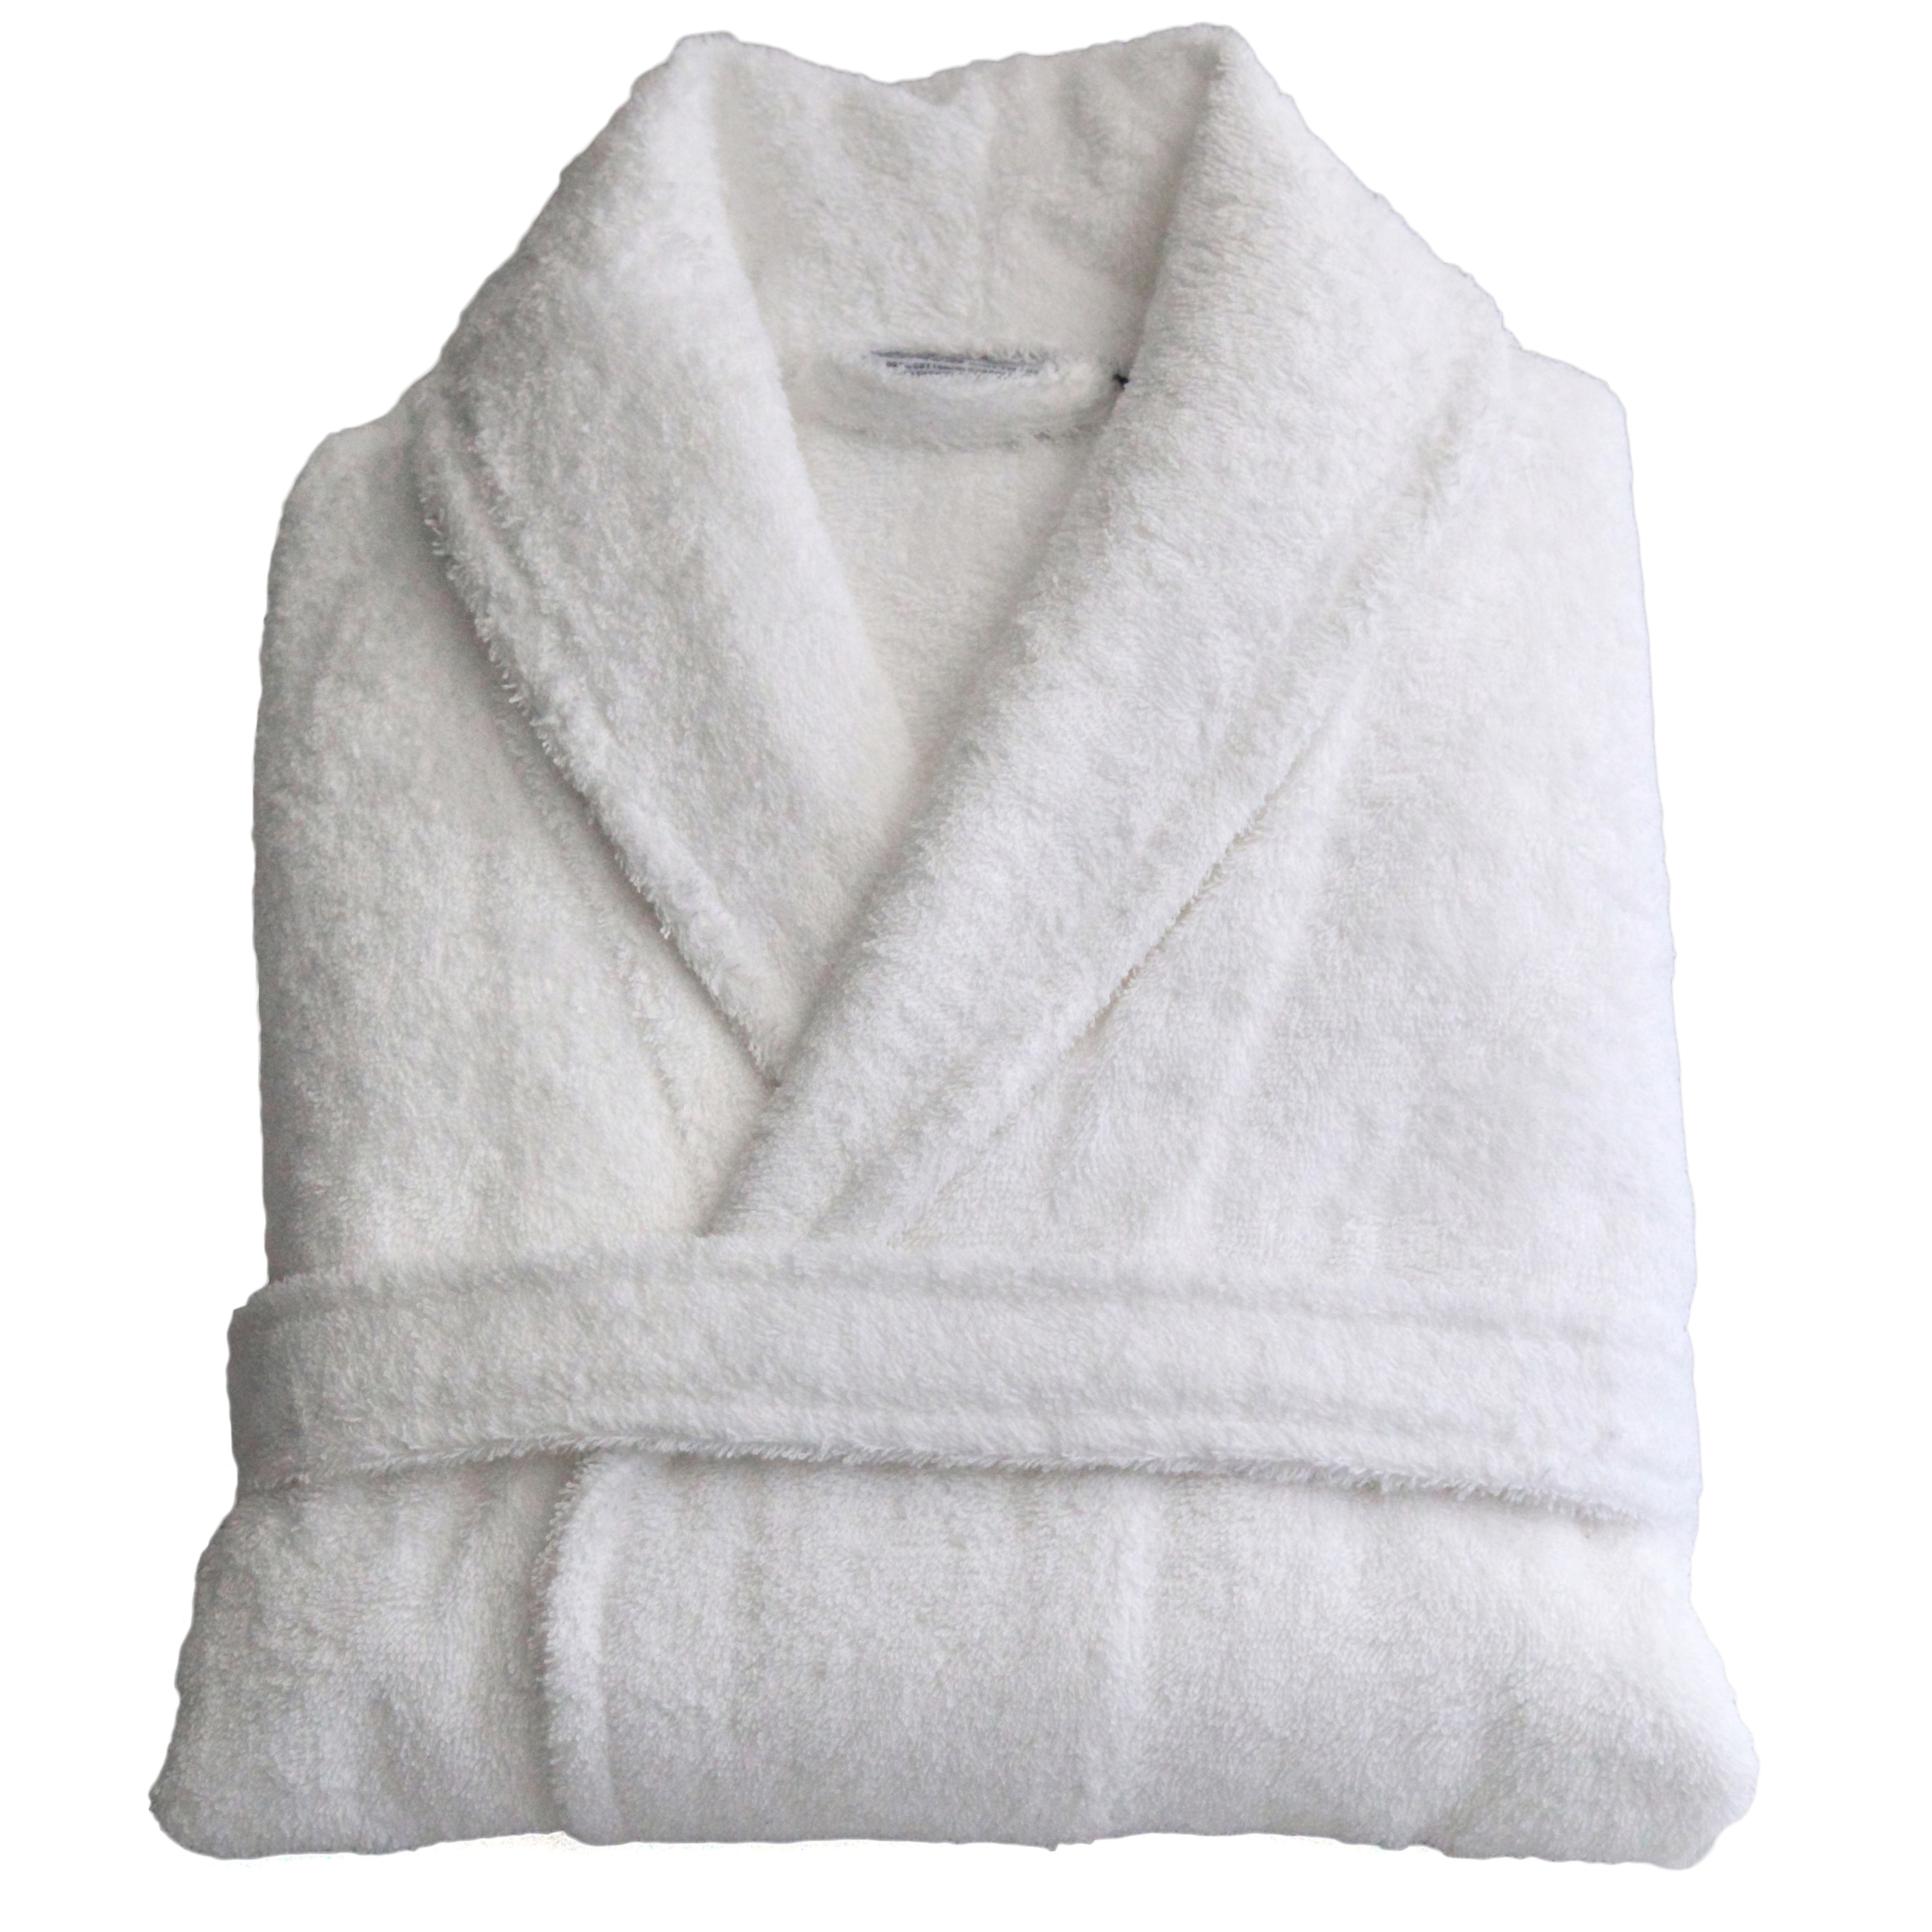 Authentic Hotel Spa Unisex Turkish Cotton Terry Cloth Bath Robe | eBay